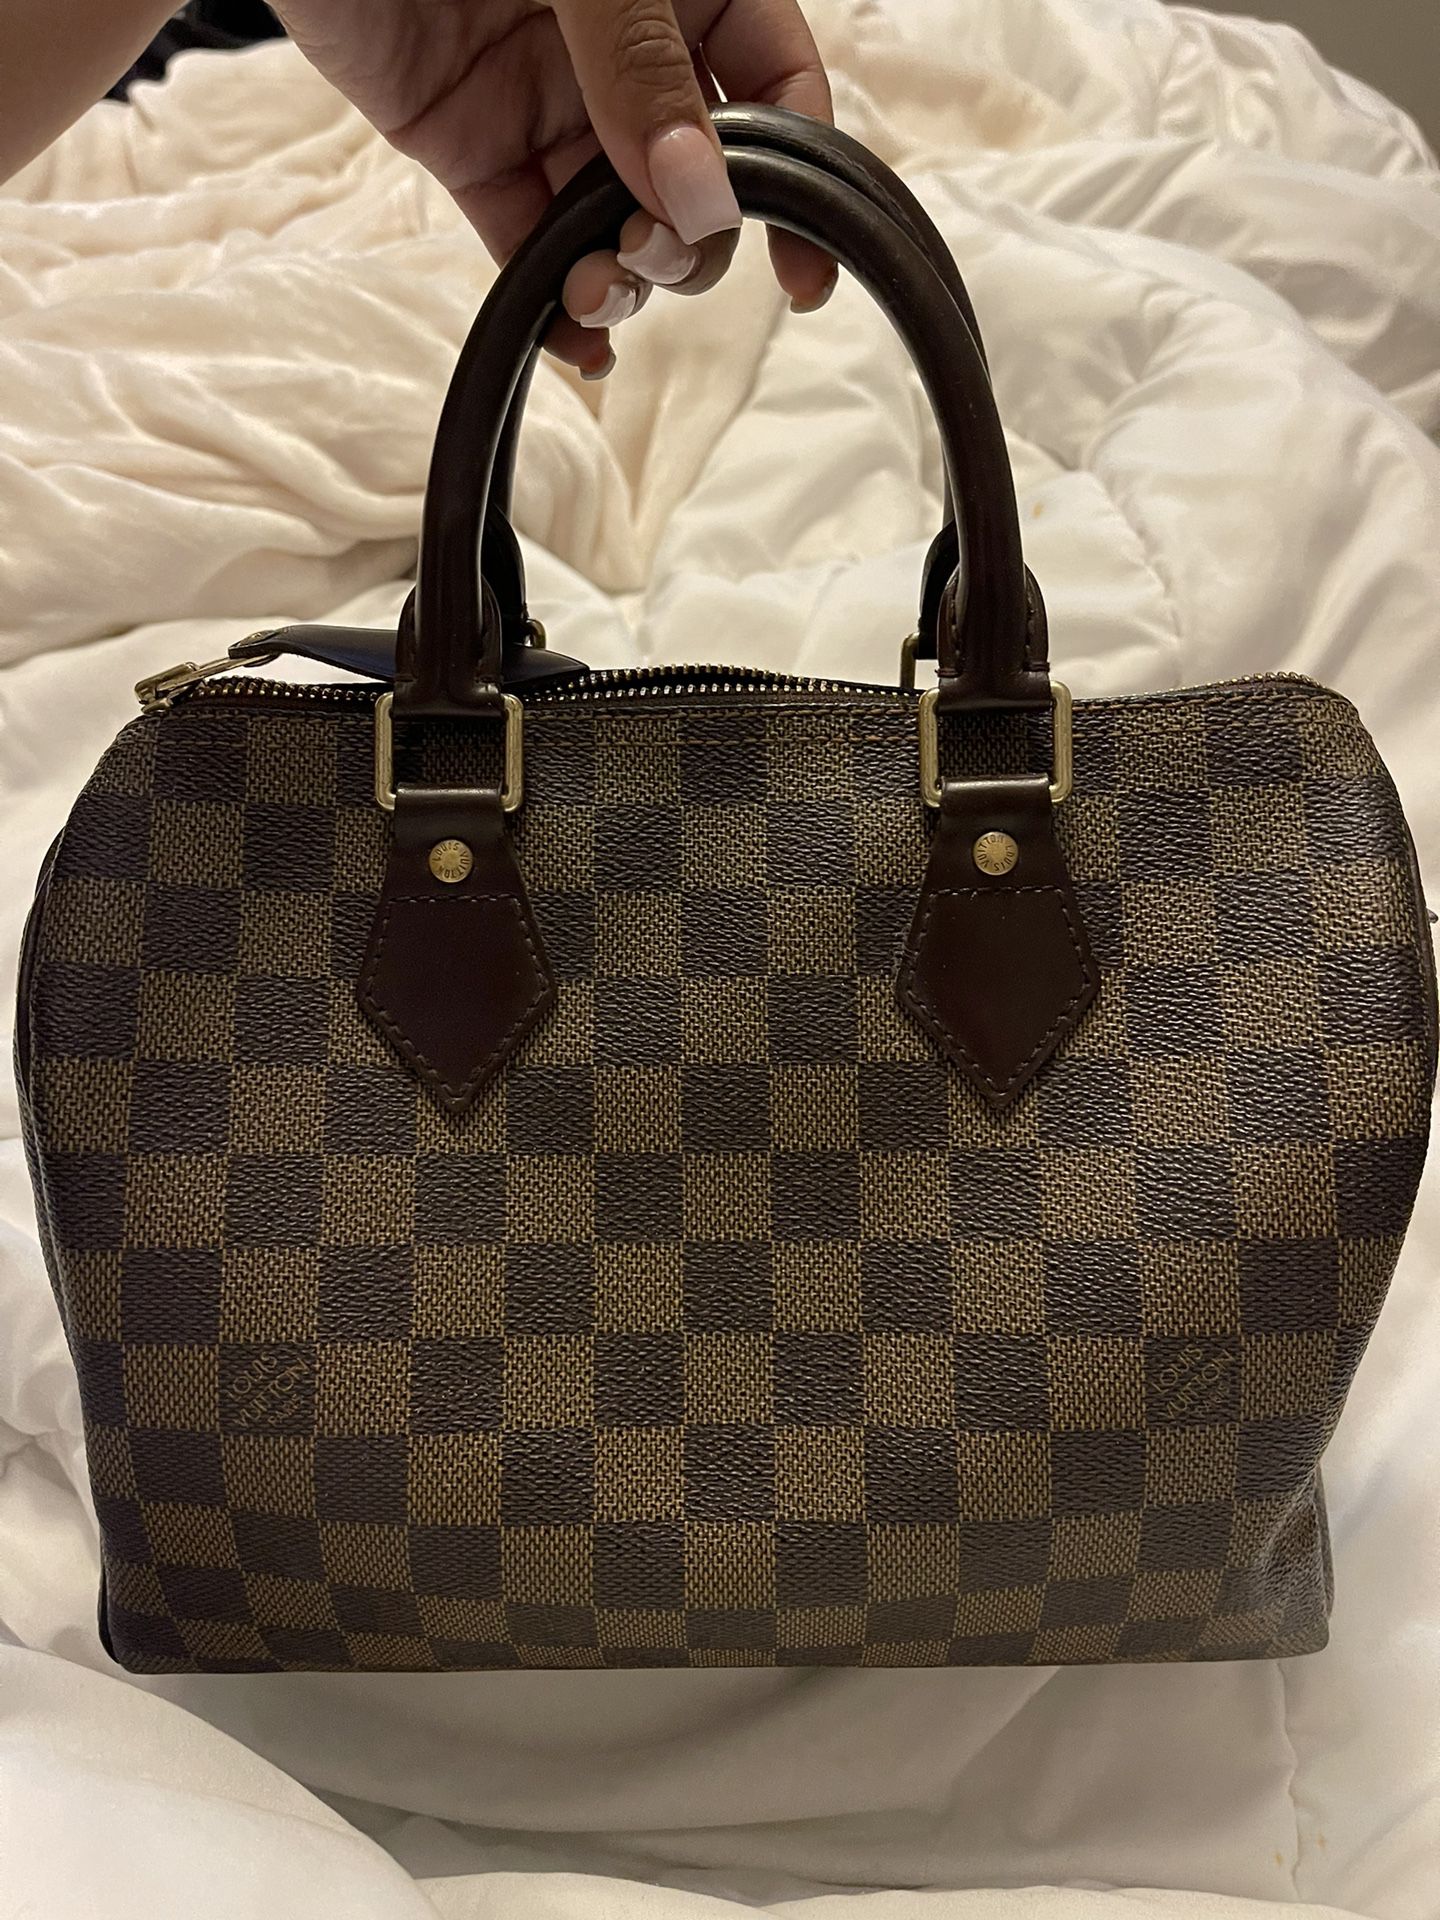 Louis Vuitton, Original Bag, for Sale in El Paso, TX - OfferUp